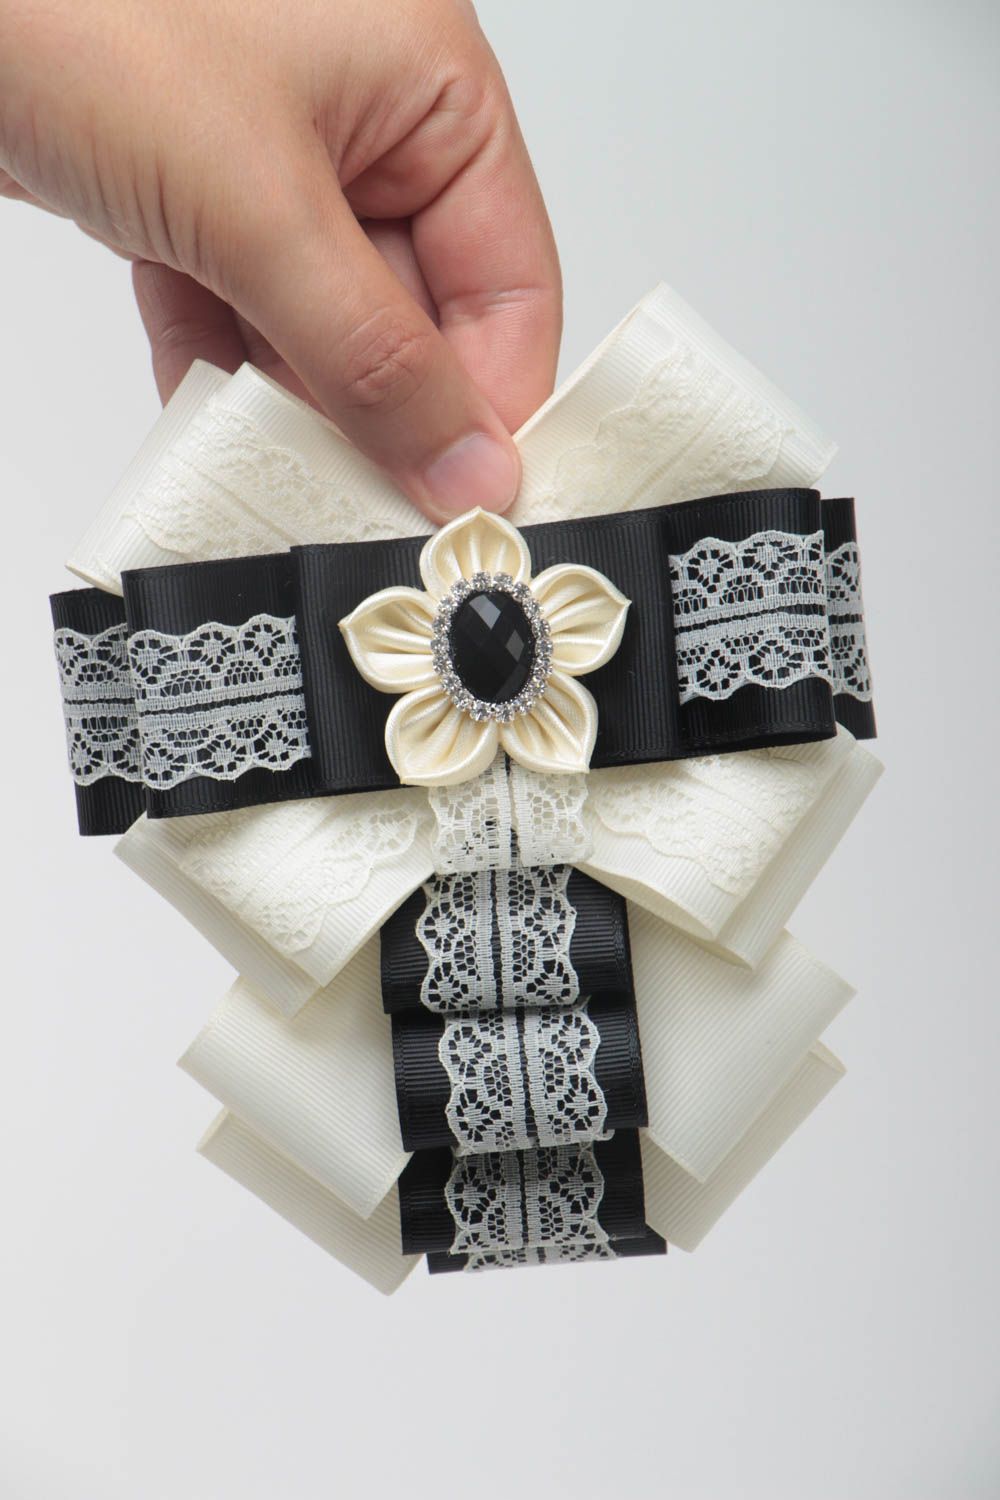 Grande broche noeud blanc noir en rubans de satin avec dentelle faite main photo 5